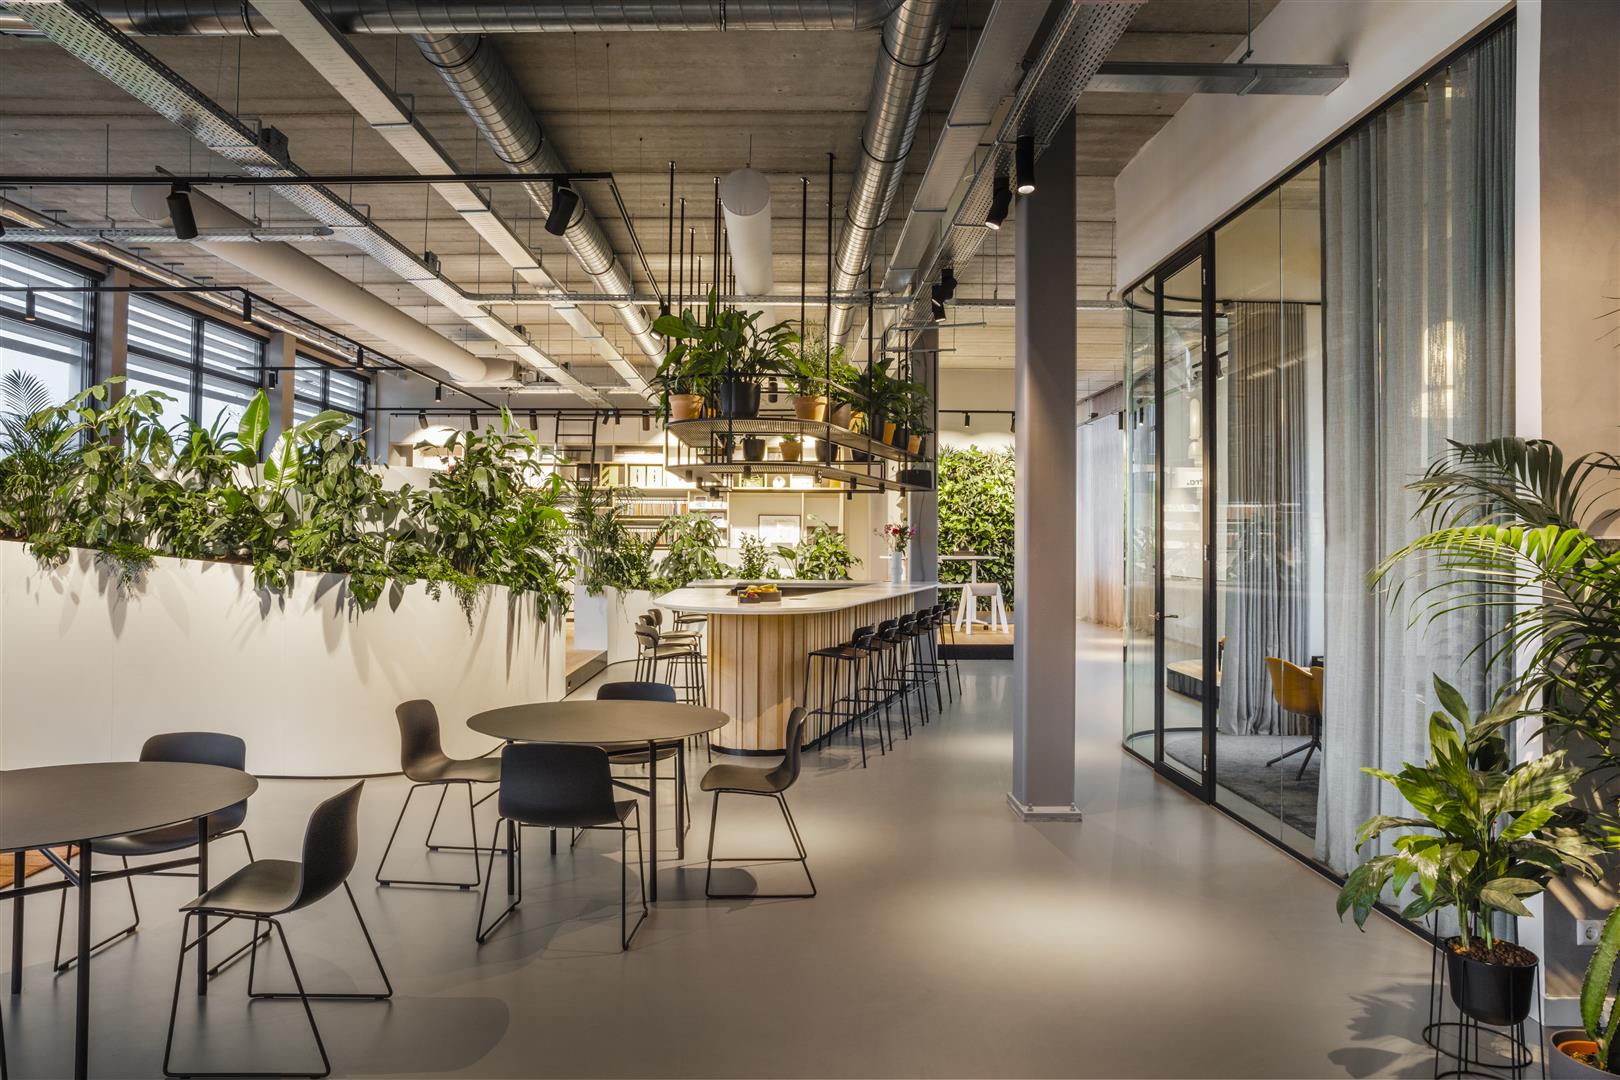 Biuro InteriorWorks w Amsterdamie, Holandia (zdjęcie: Rick Geenjaar)